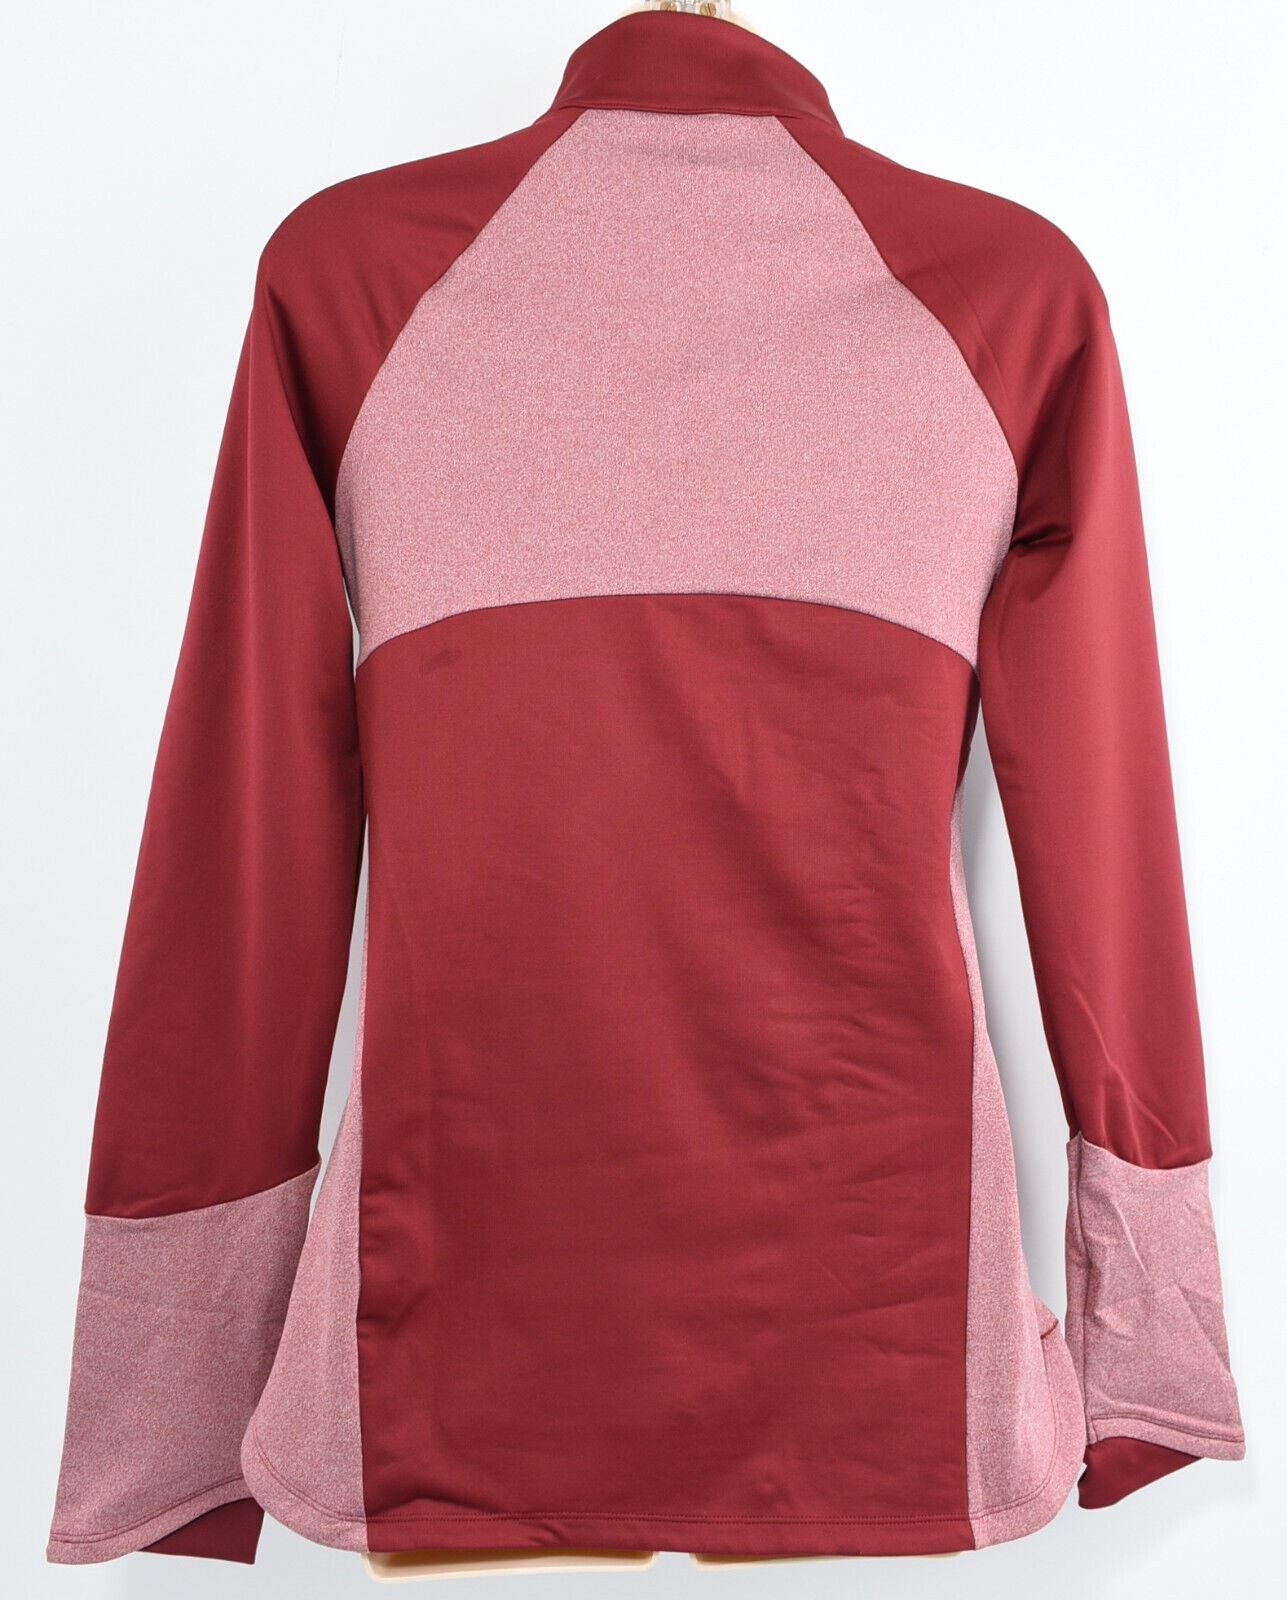 UNDER ARMOUR UA COZY Women's 1/2 Zip Long Sleeve Top, League Red, size M /UK 12